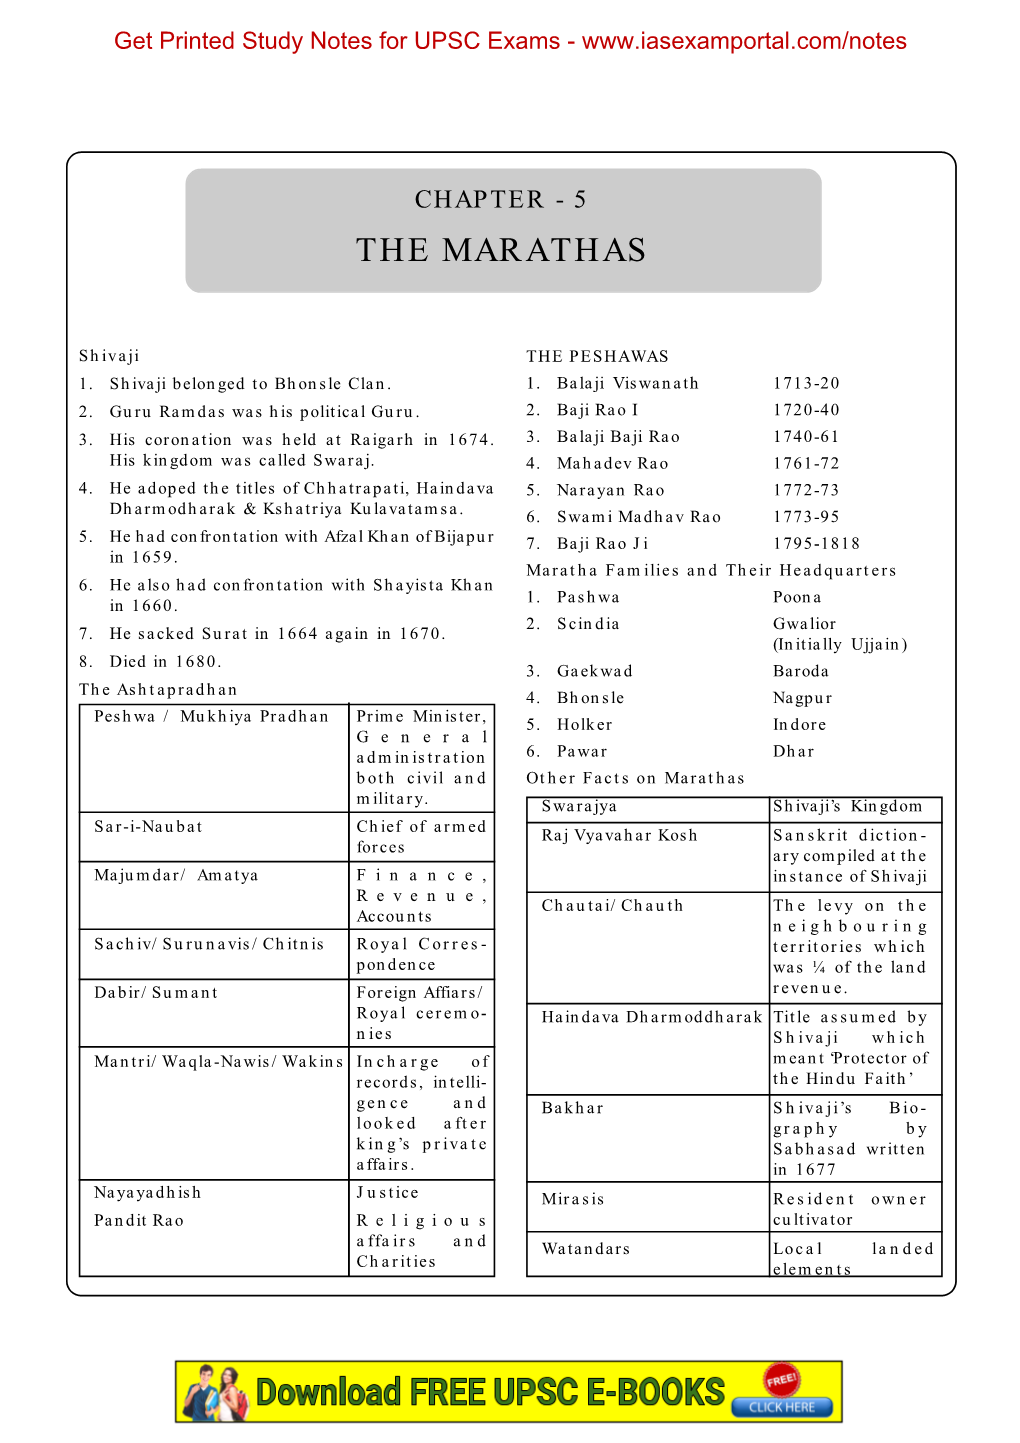 The Marathas